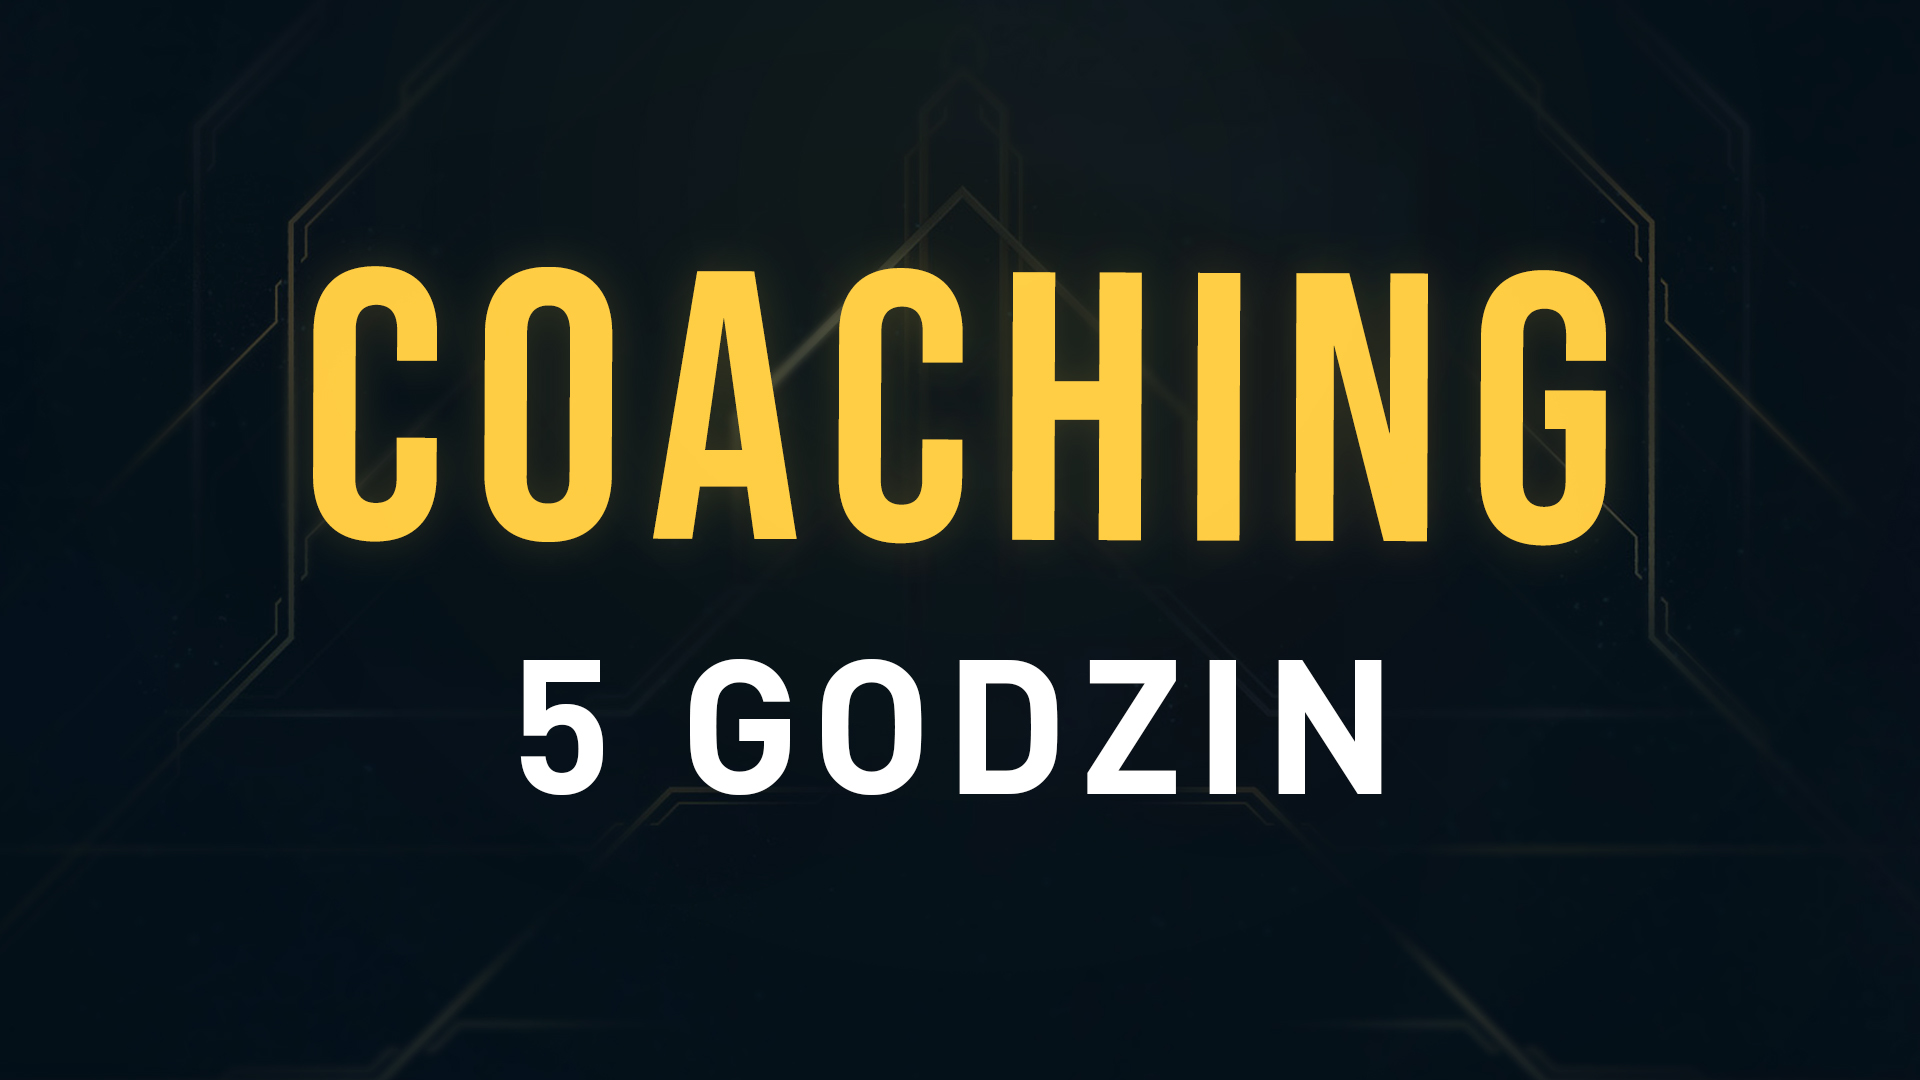 LOL: Coaching - 5 godzin